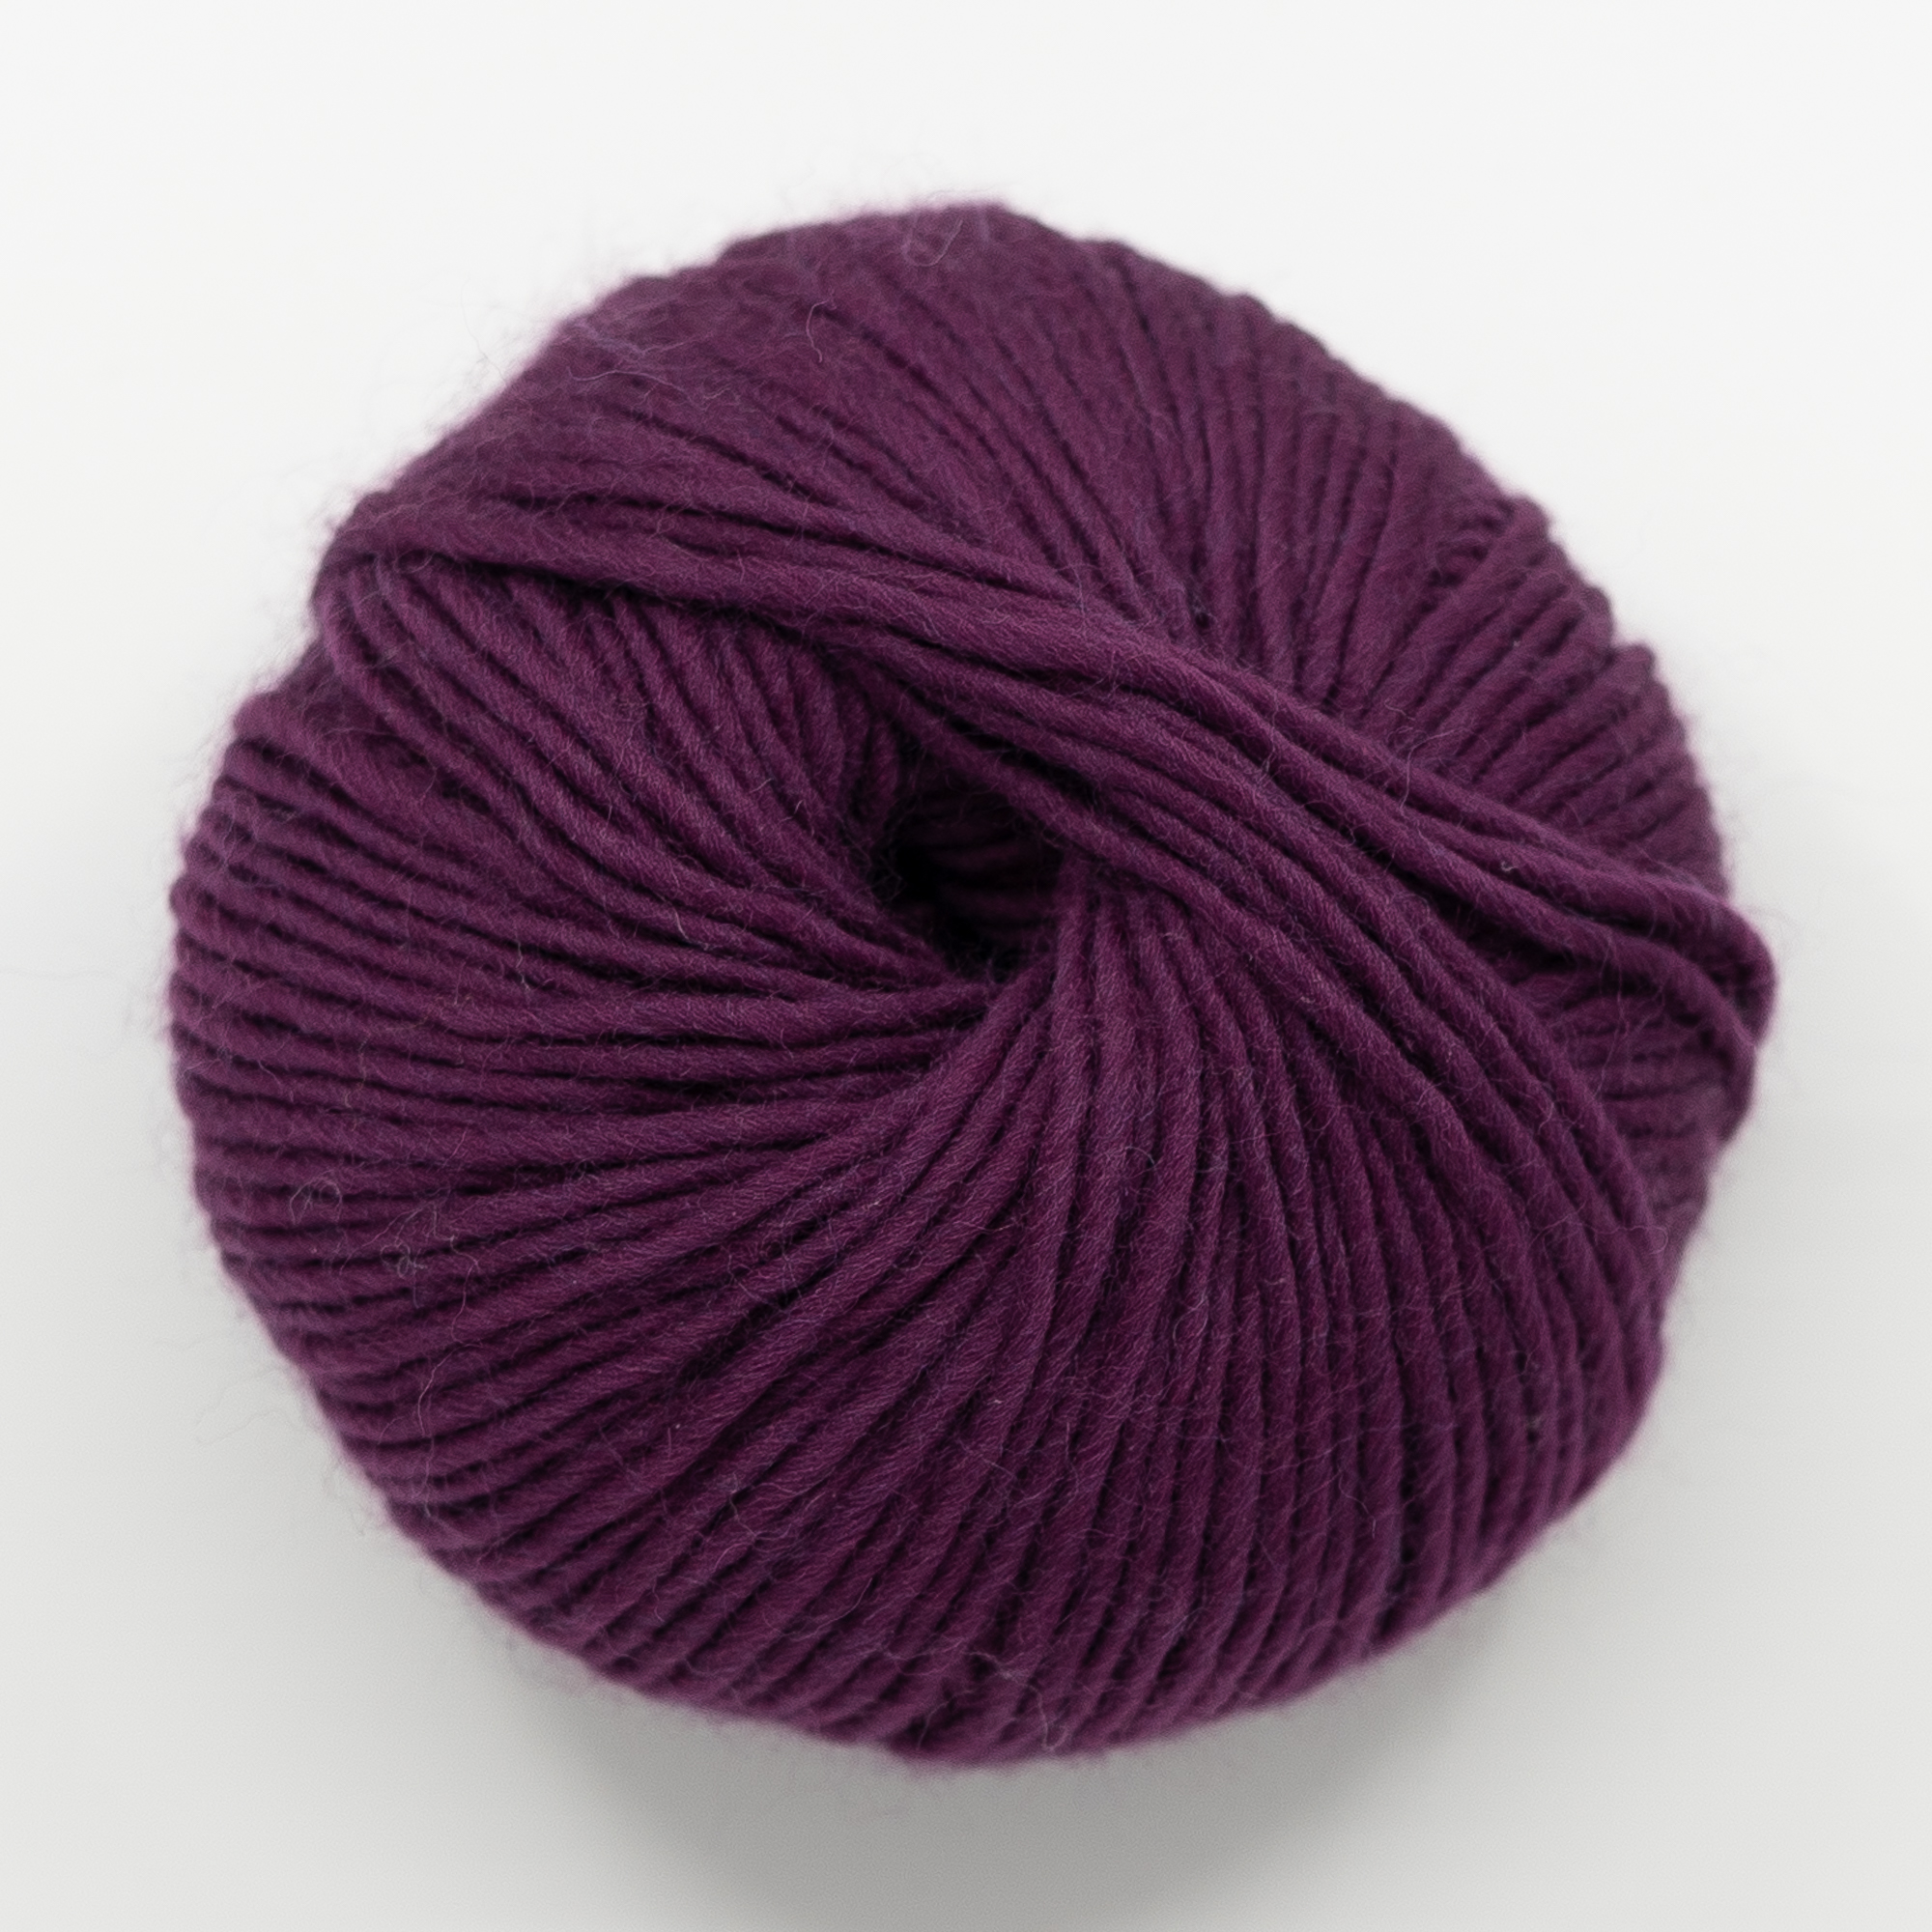  - Wild plum Hip Wool yarn | Purple yarn | Pure wool - by HipKnitShop - 19/11/2020